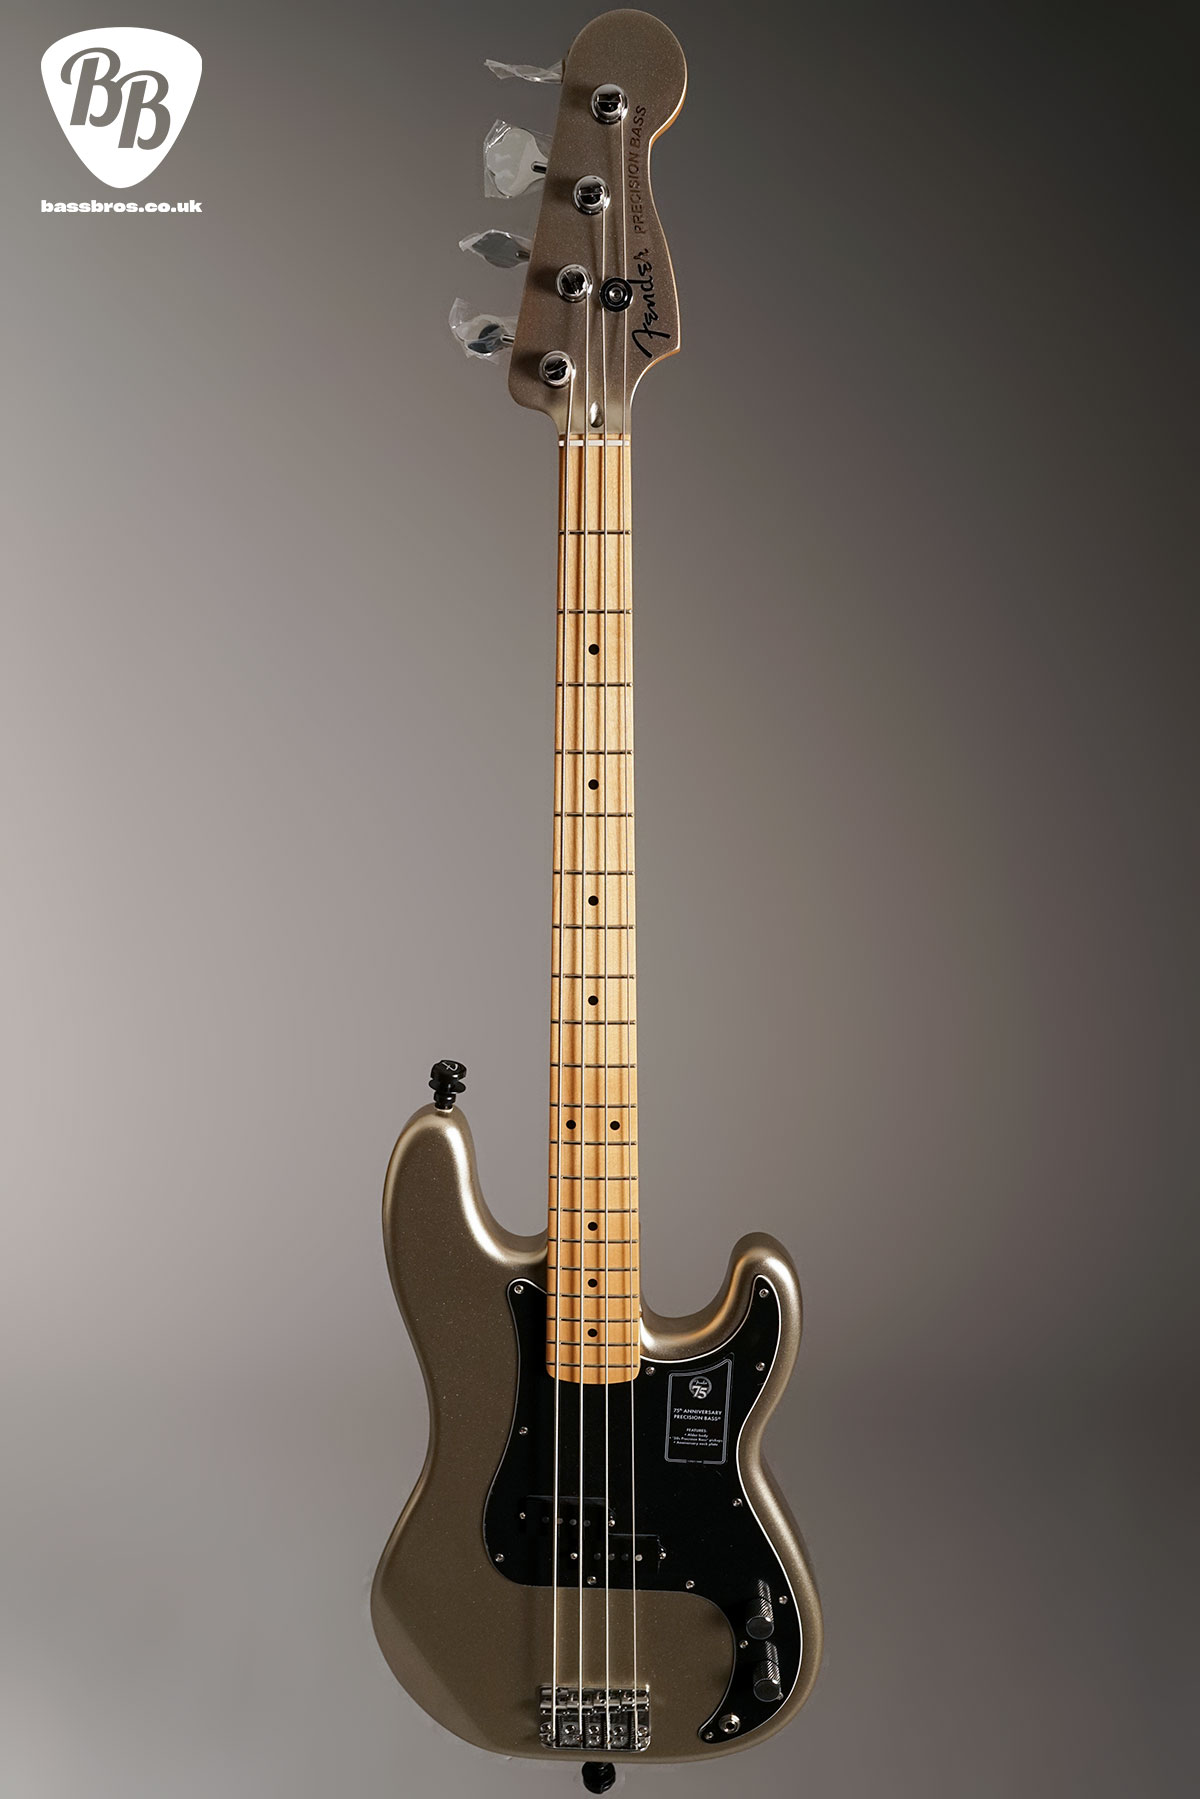 2021 Fender 75th Anniversary Precision Bass | BassBros